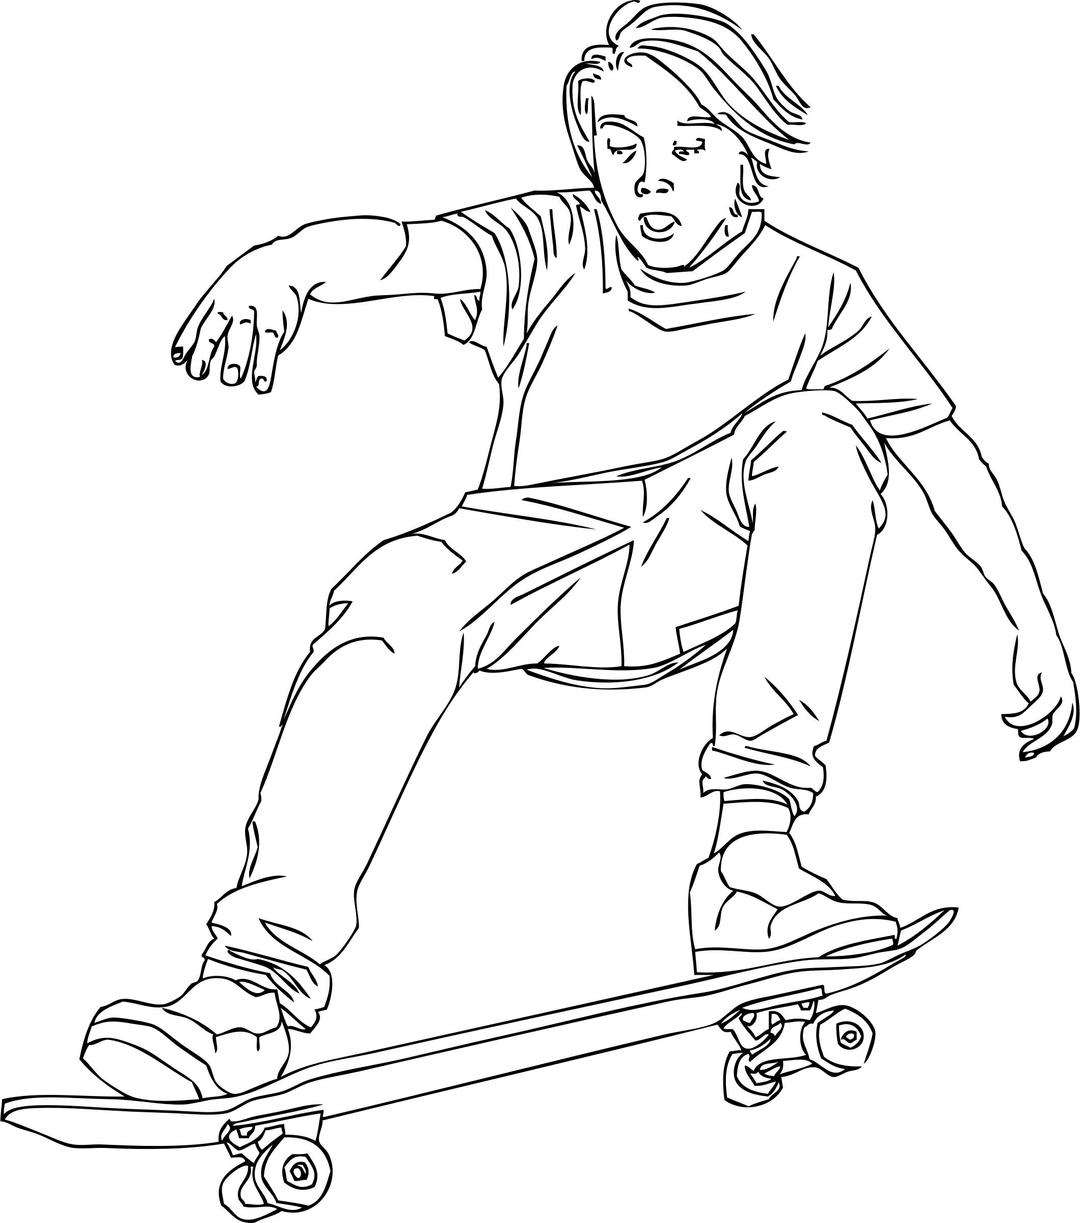 Ollie (skateboarding) - Big Air png transparent